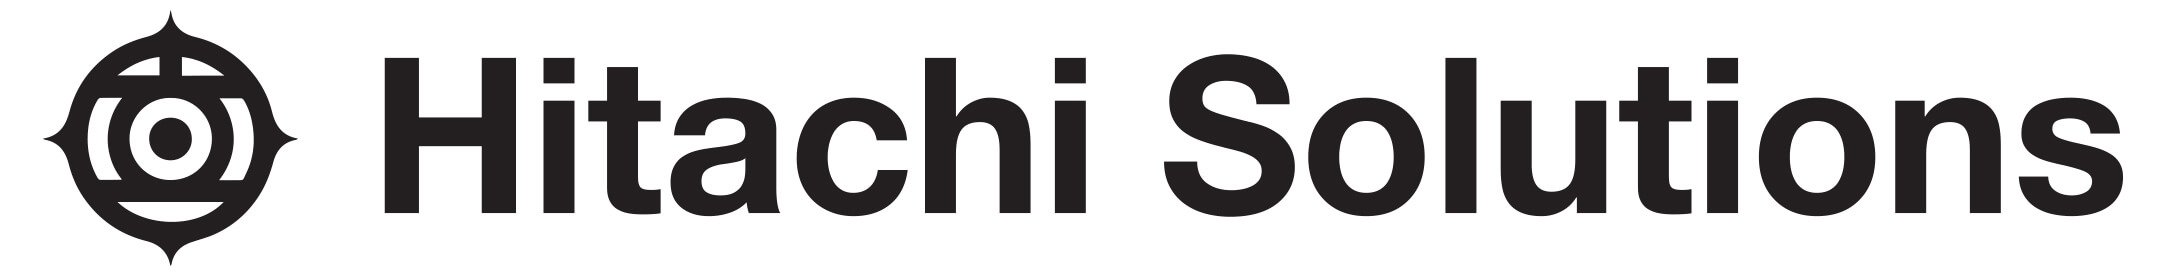 hitachi-solutions-logo.jpg